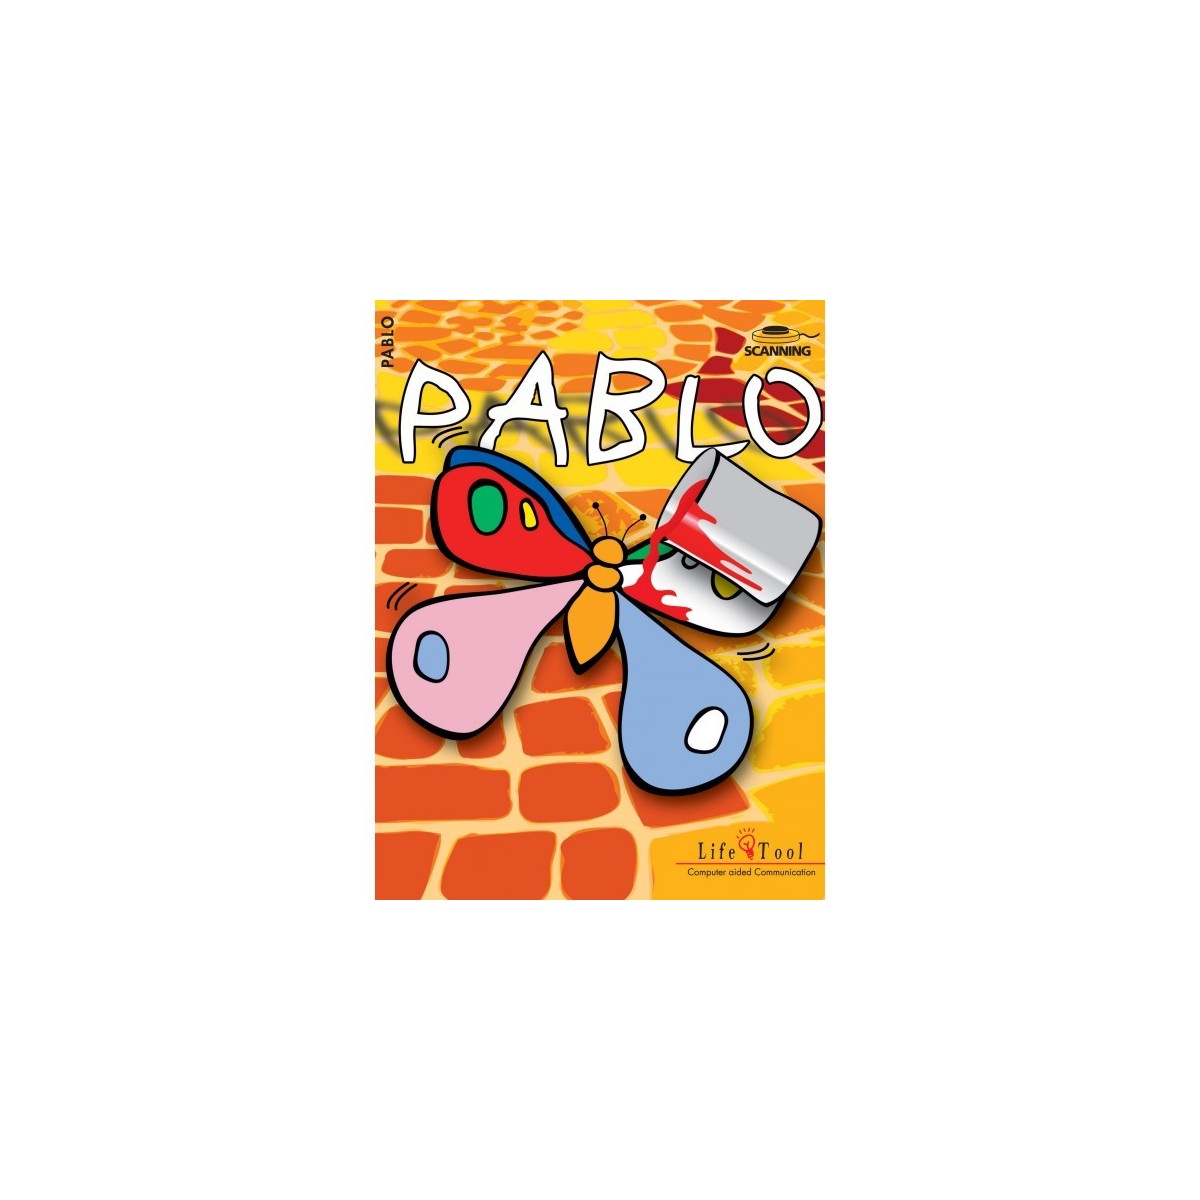 Pablo (incl. Scanning) Lifetool